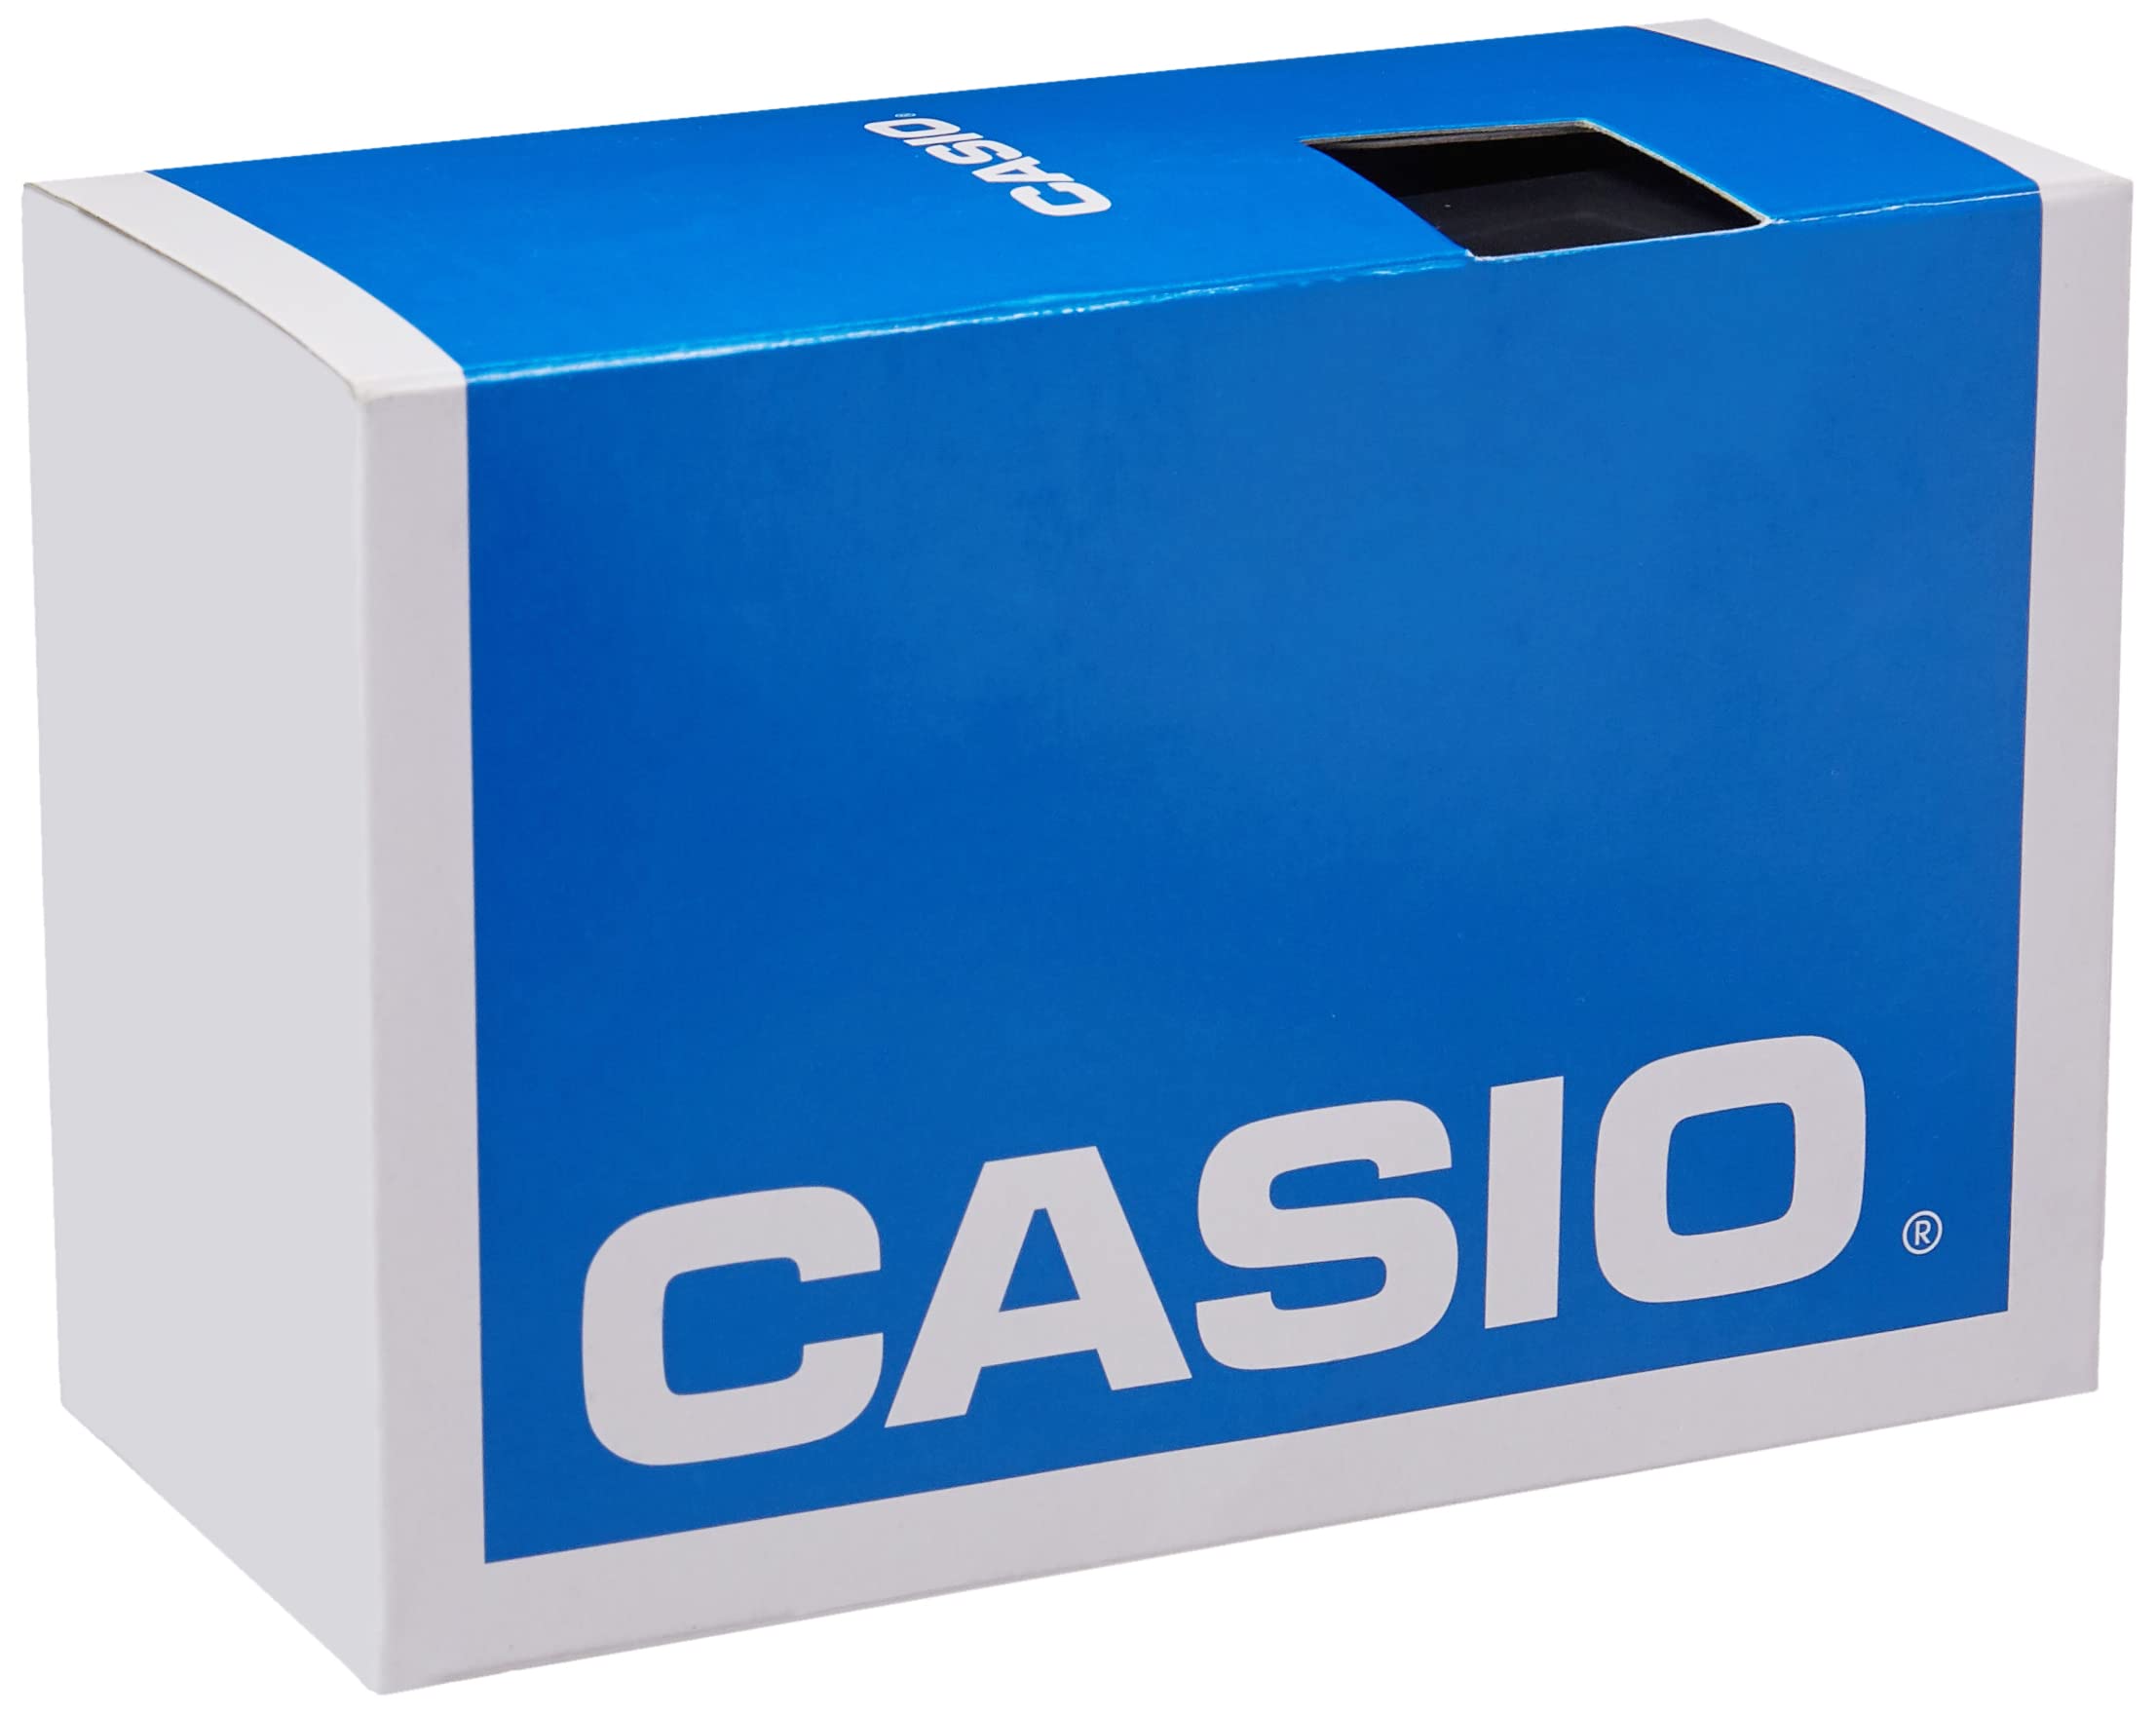 Casio Illuminator Alarm Chronograph Digital Sport Watch (Model W218HC-4A2V) (Light Pink)